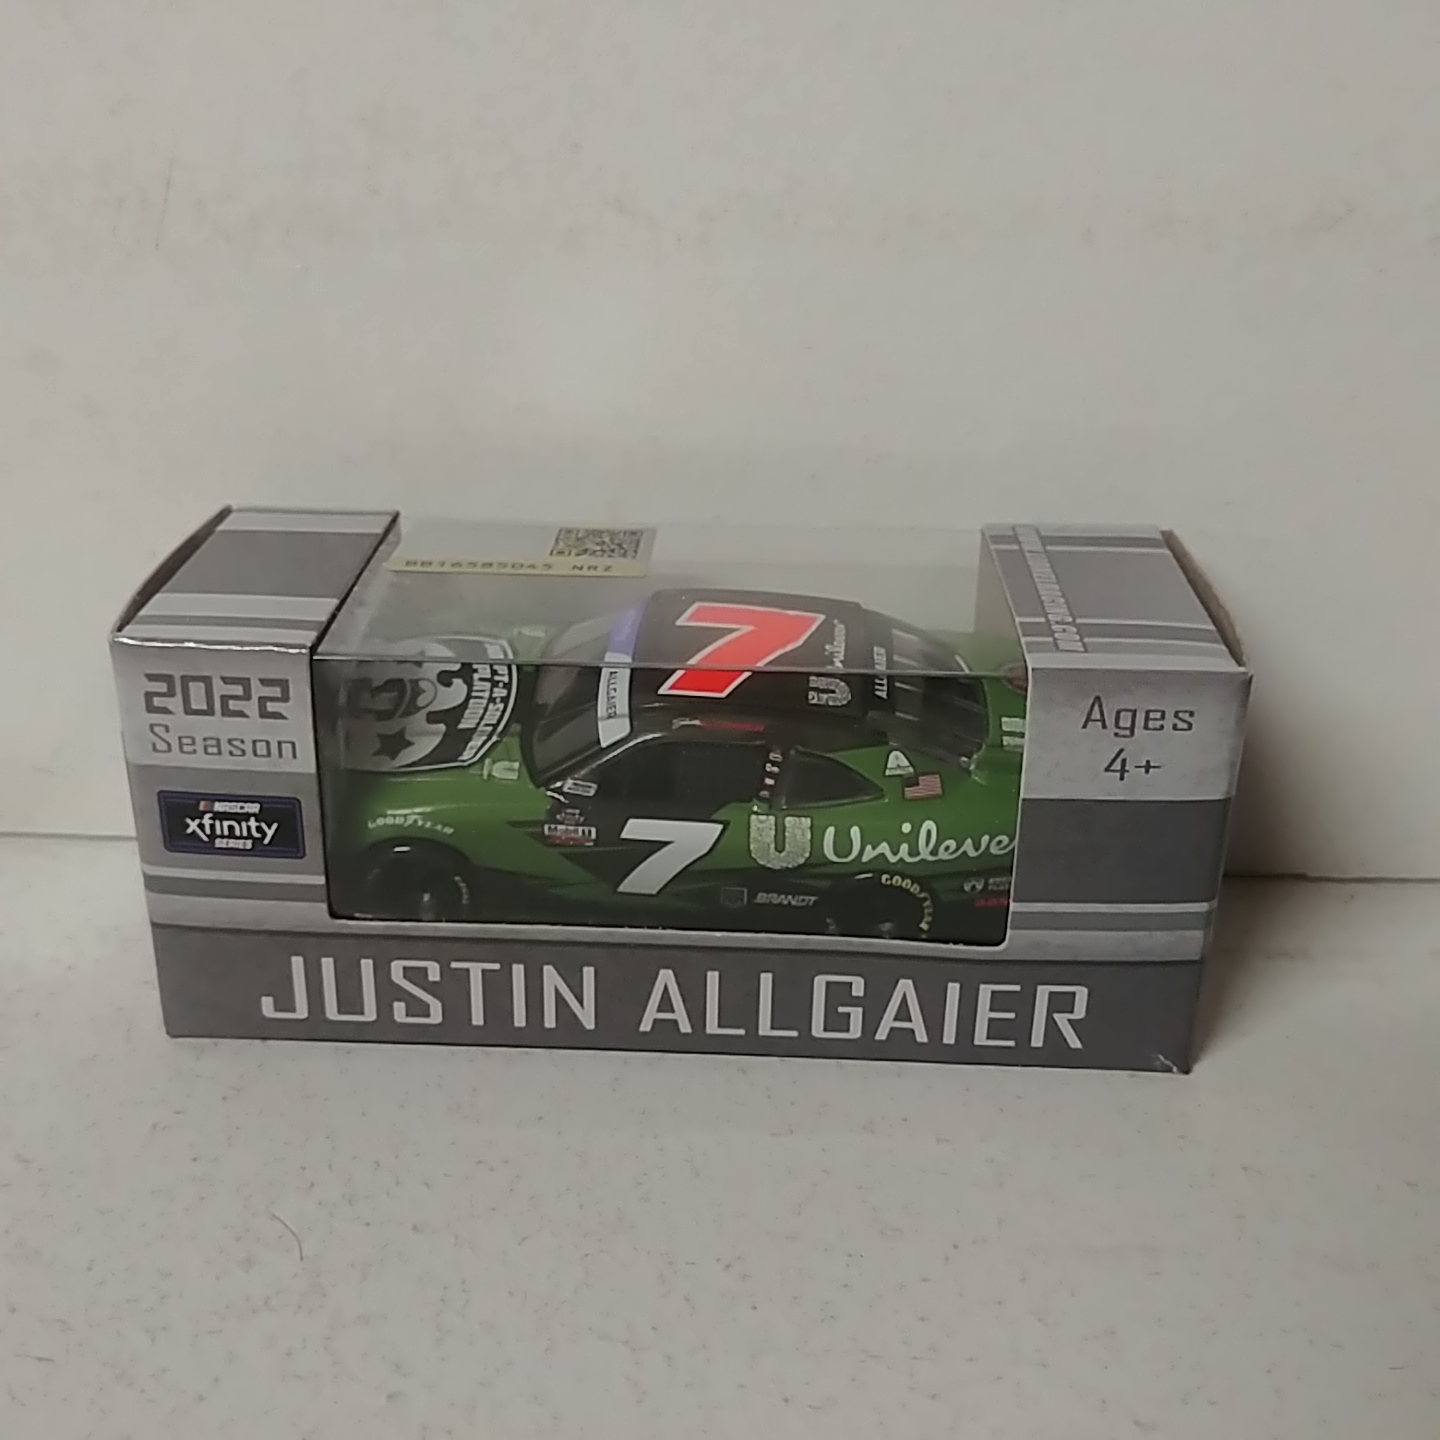 2022 Justin Alligair 1/64th Unilever "Military""Xfinity Series" car